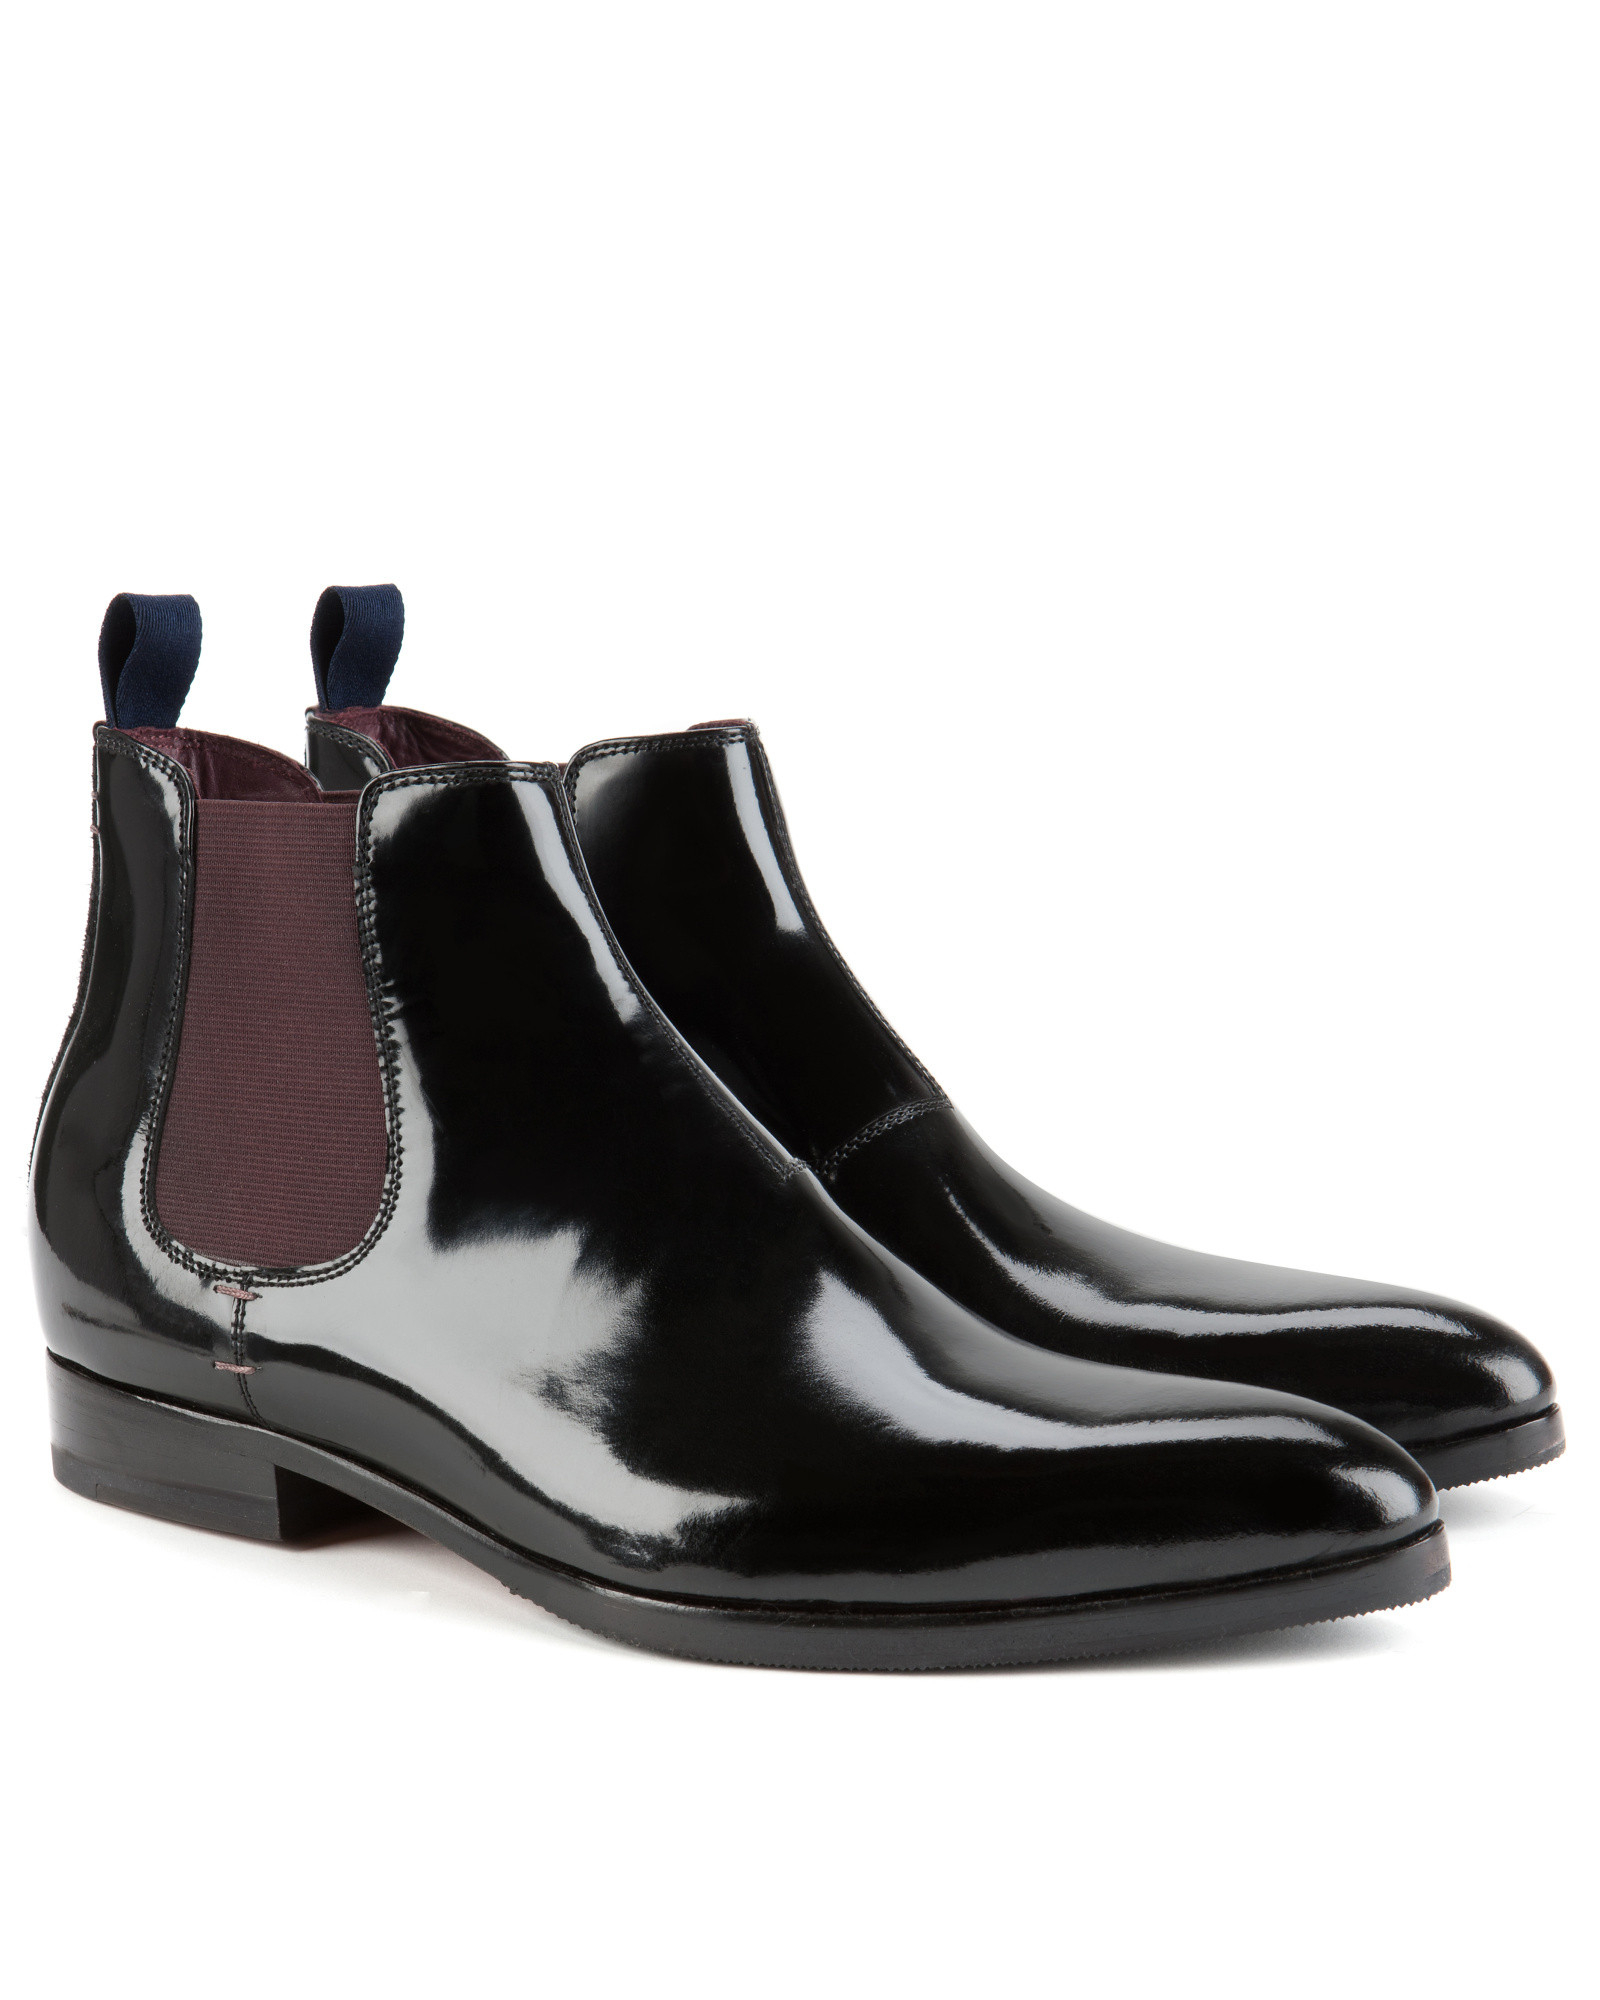 Lyst - Ted Baker High Shine Chelsea Boots in Black for Men